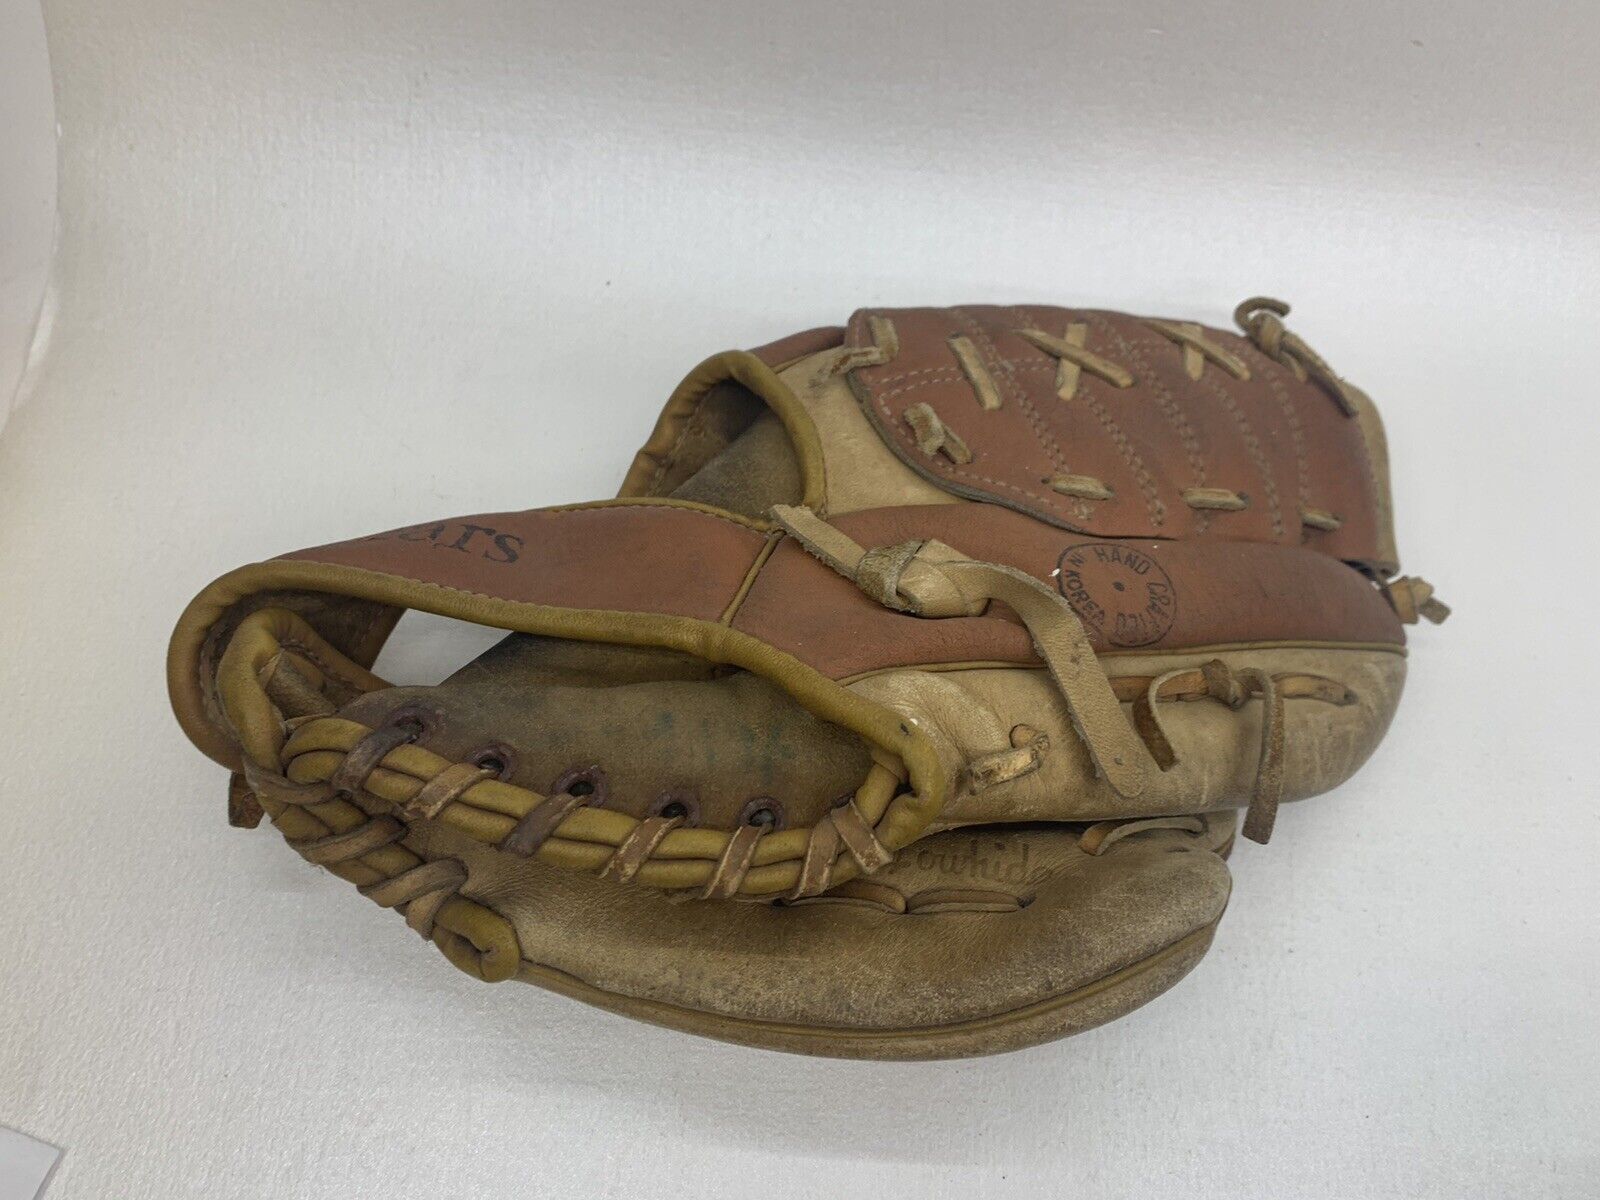 Vintage Sears #16152 Kids Baseball Glove Made in Korea RH Throw